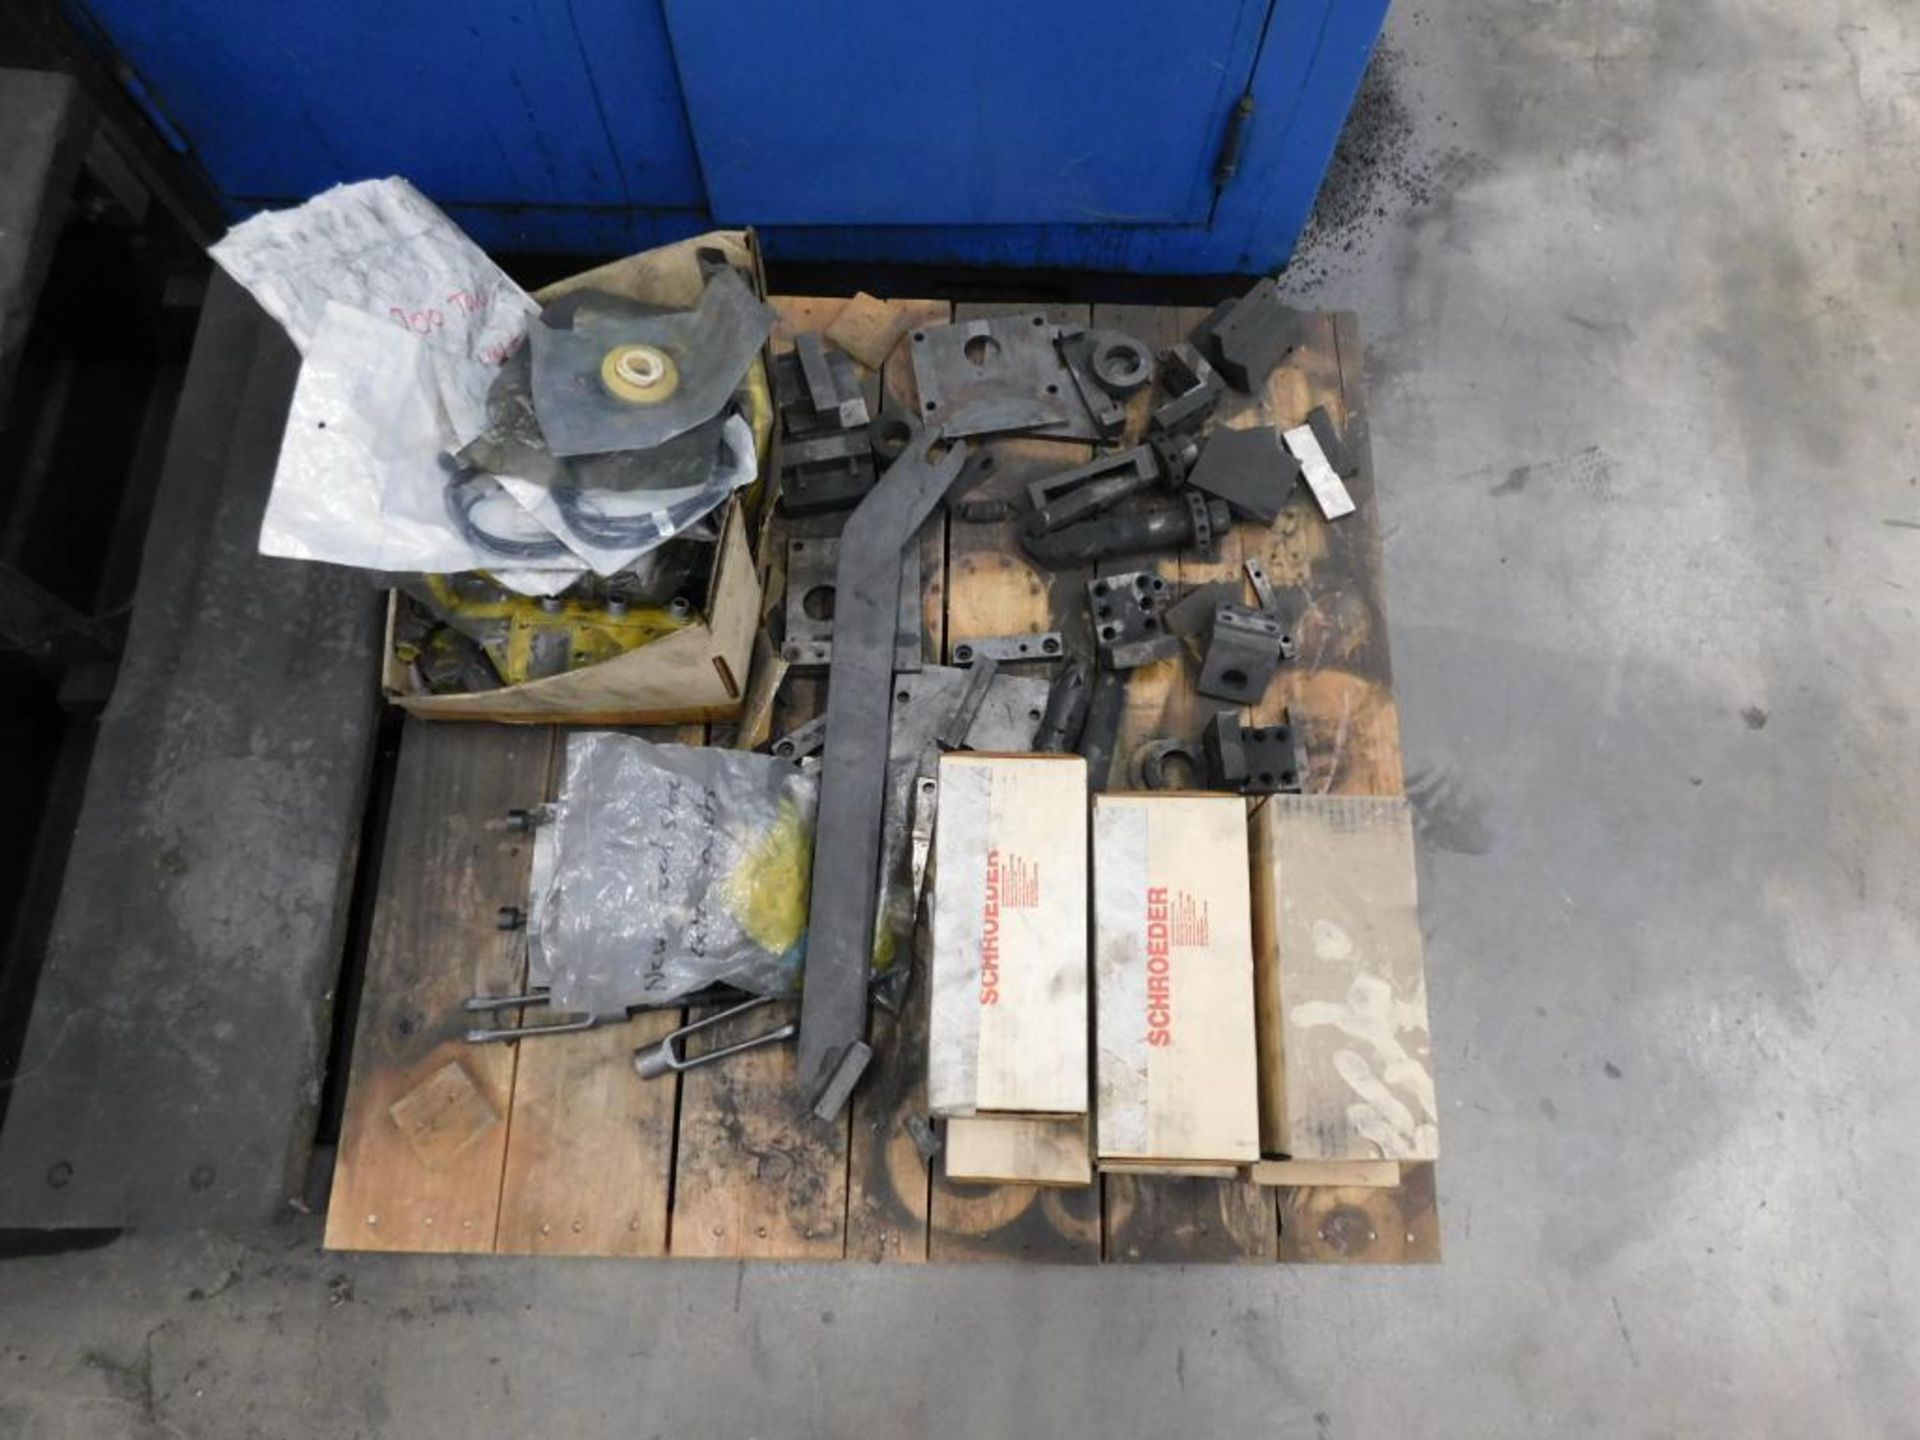 Kotaki Powder Compacting Press, Hydraulic, Model KPH-100, S/N: 2123, 100 Ton Maximum Pressing Force, - Image 22 of 27